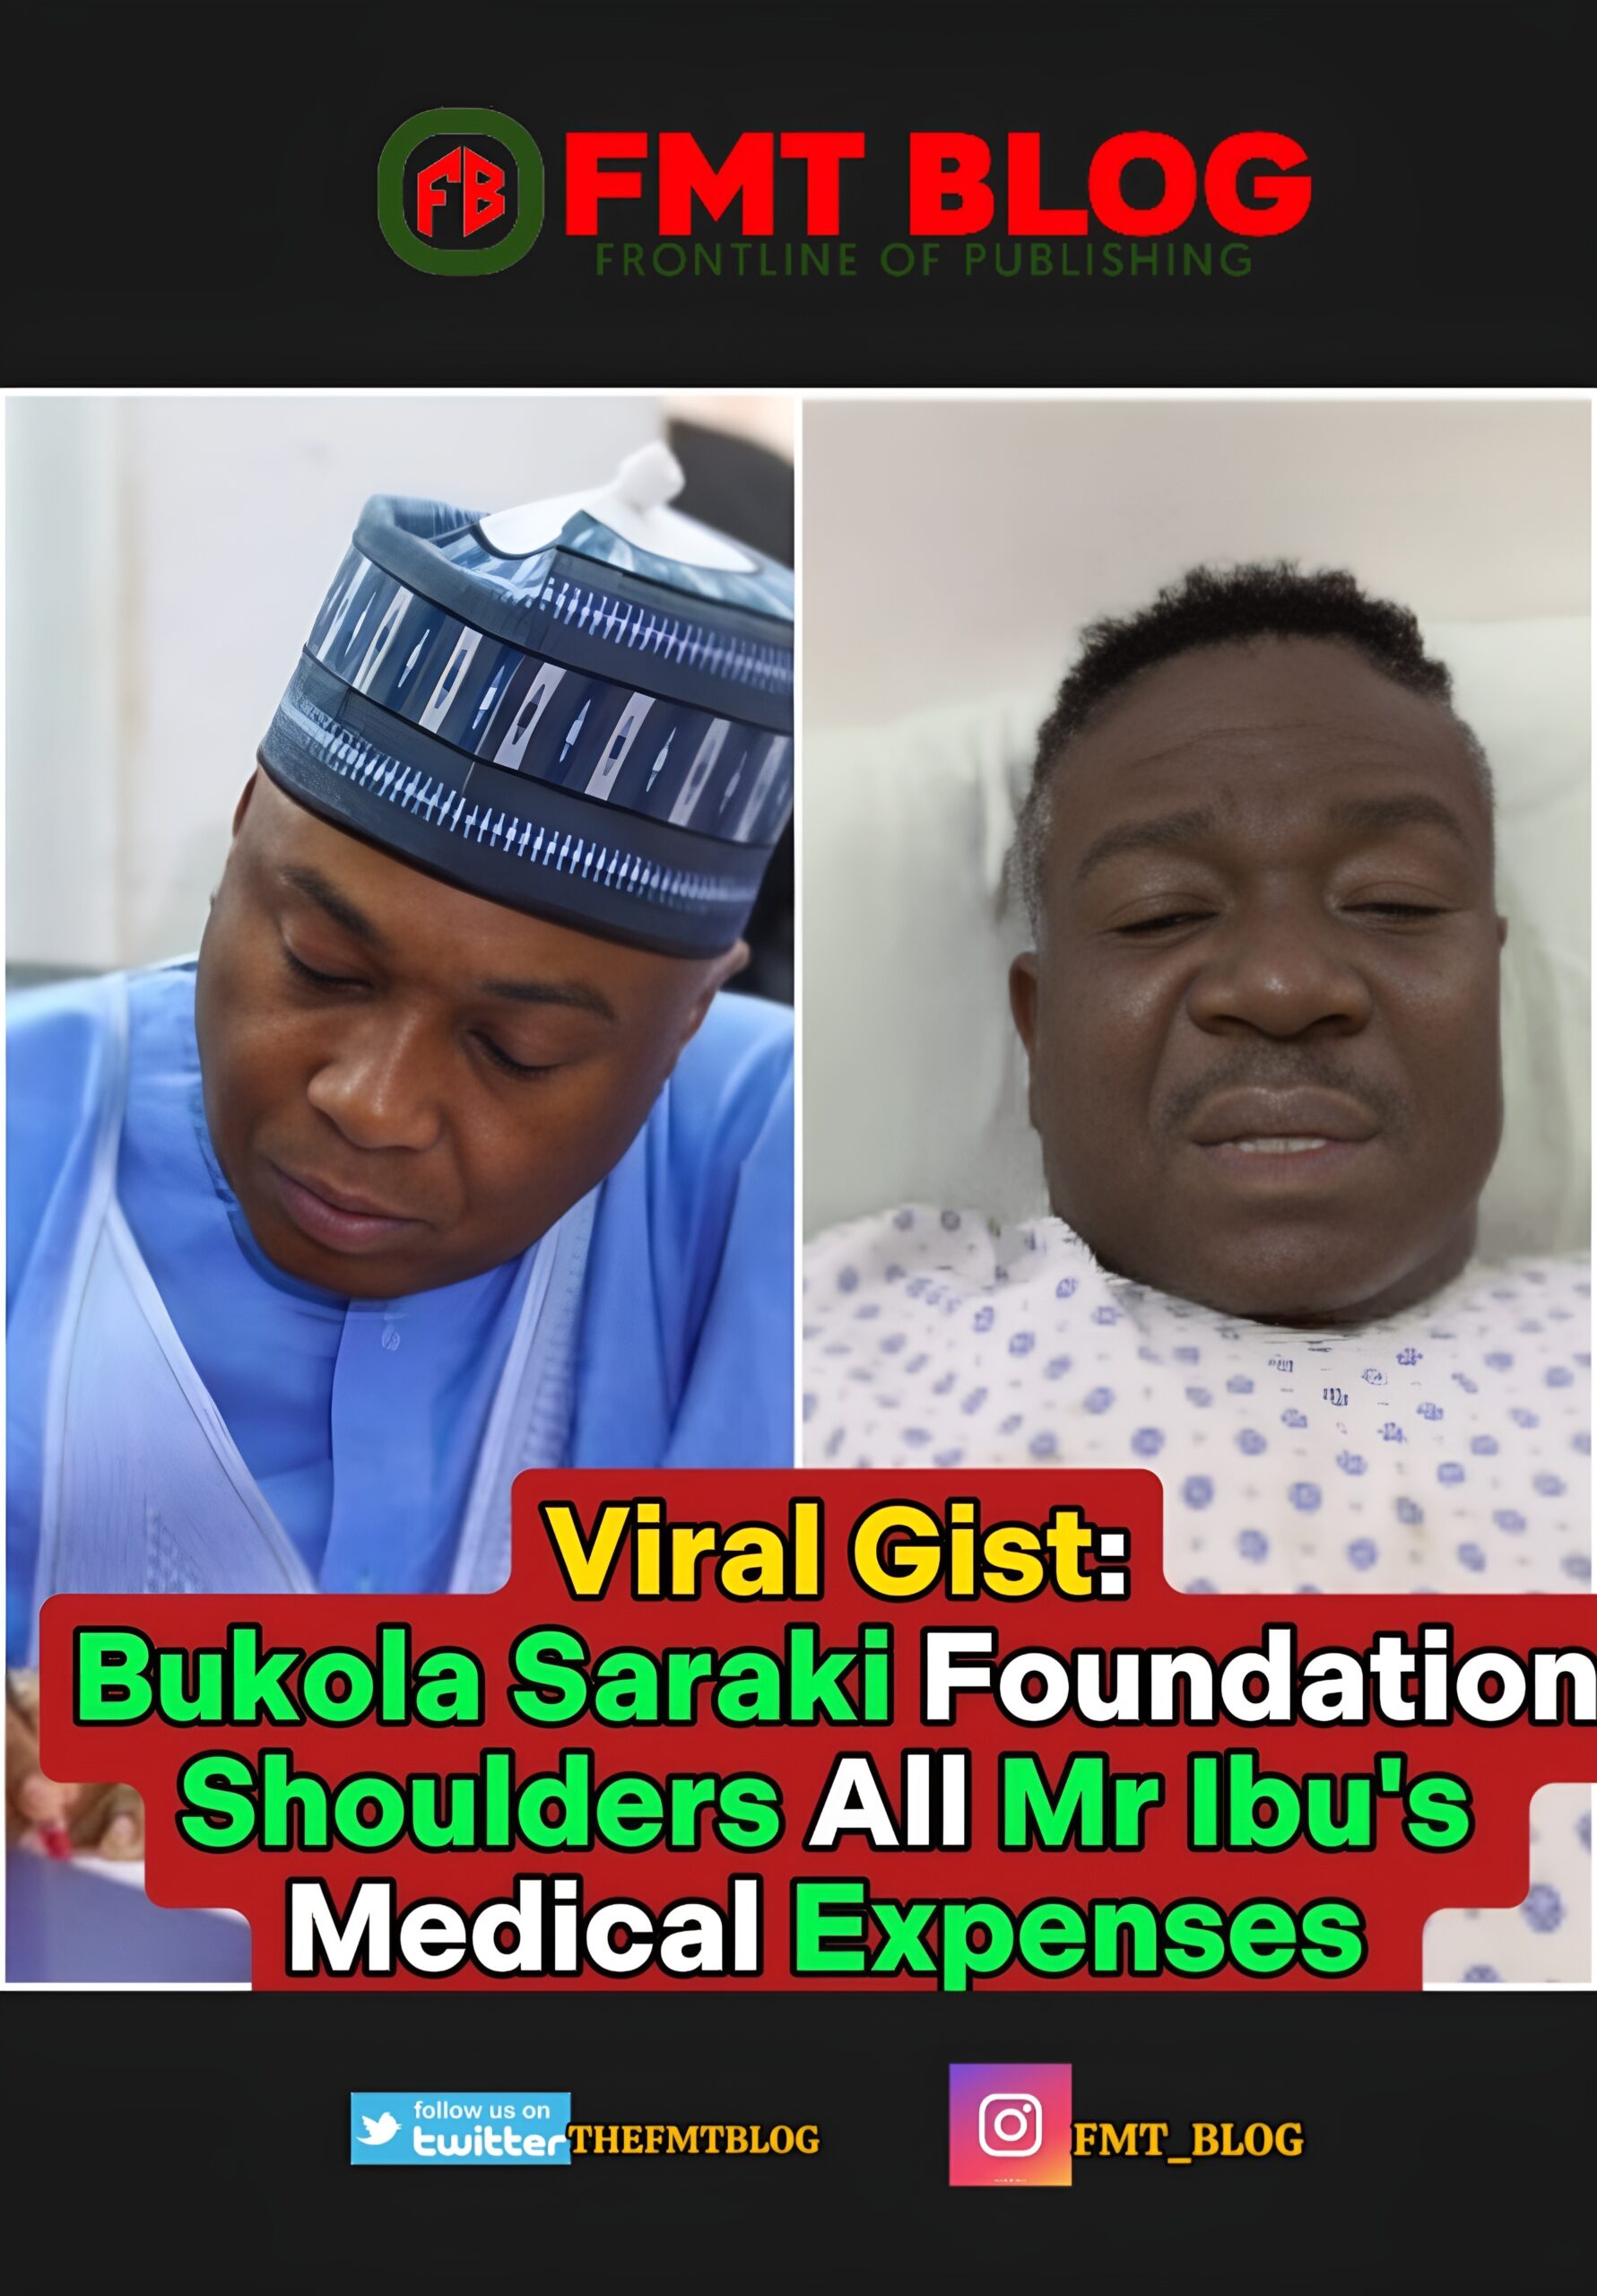 Bukola Saraki Foundation Shoulders All Mr Ibu’s Medical Expenses